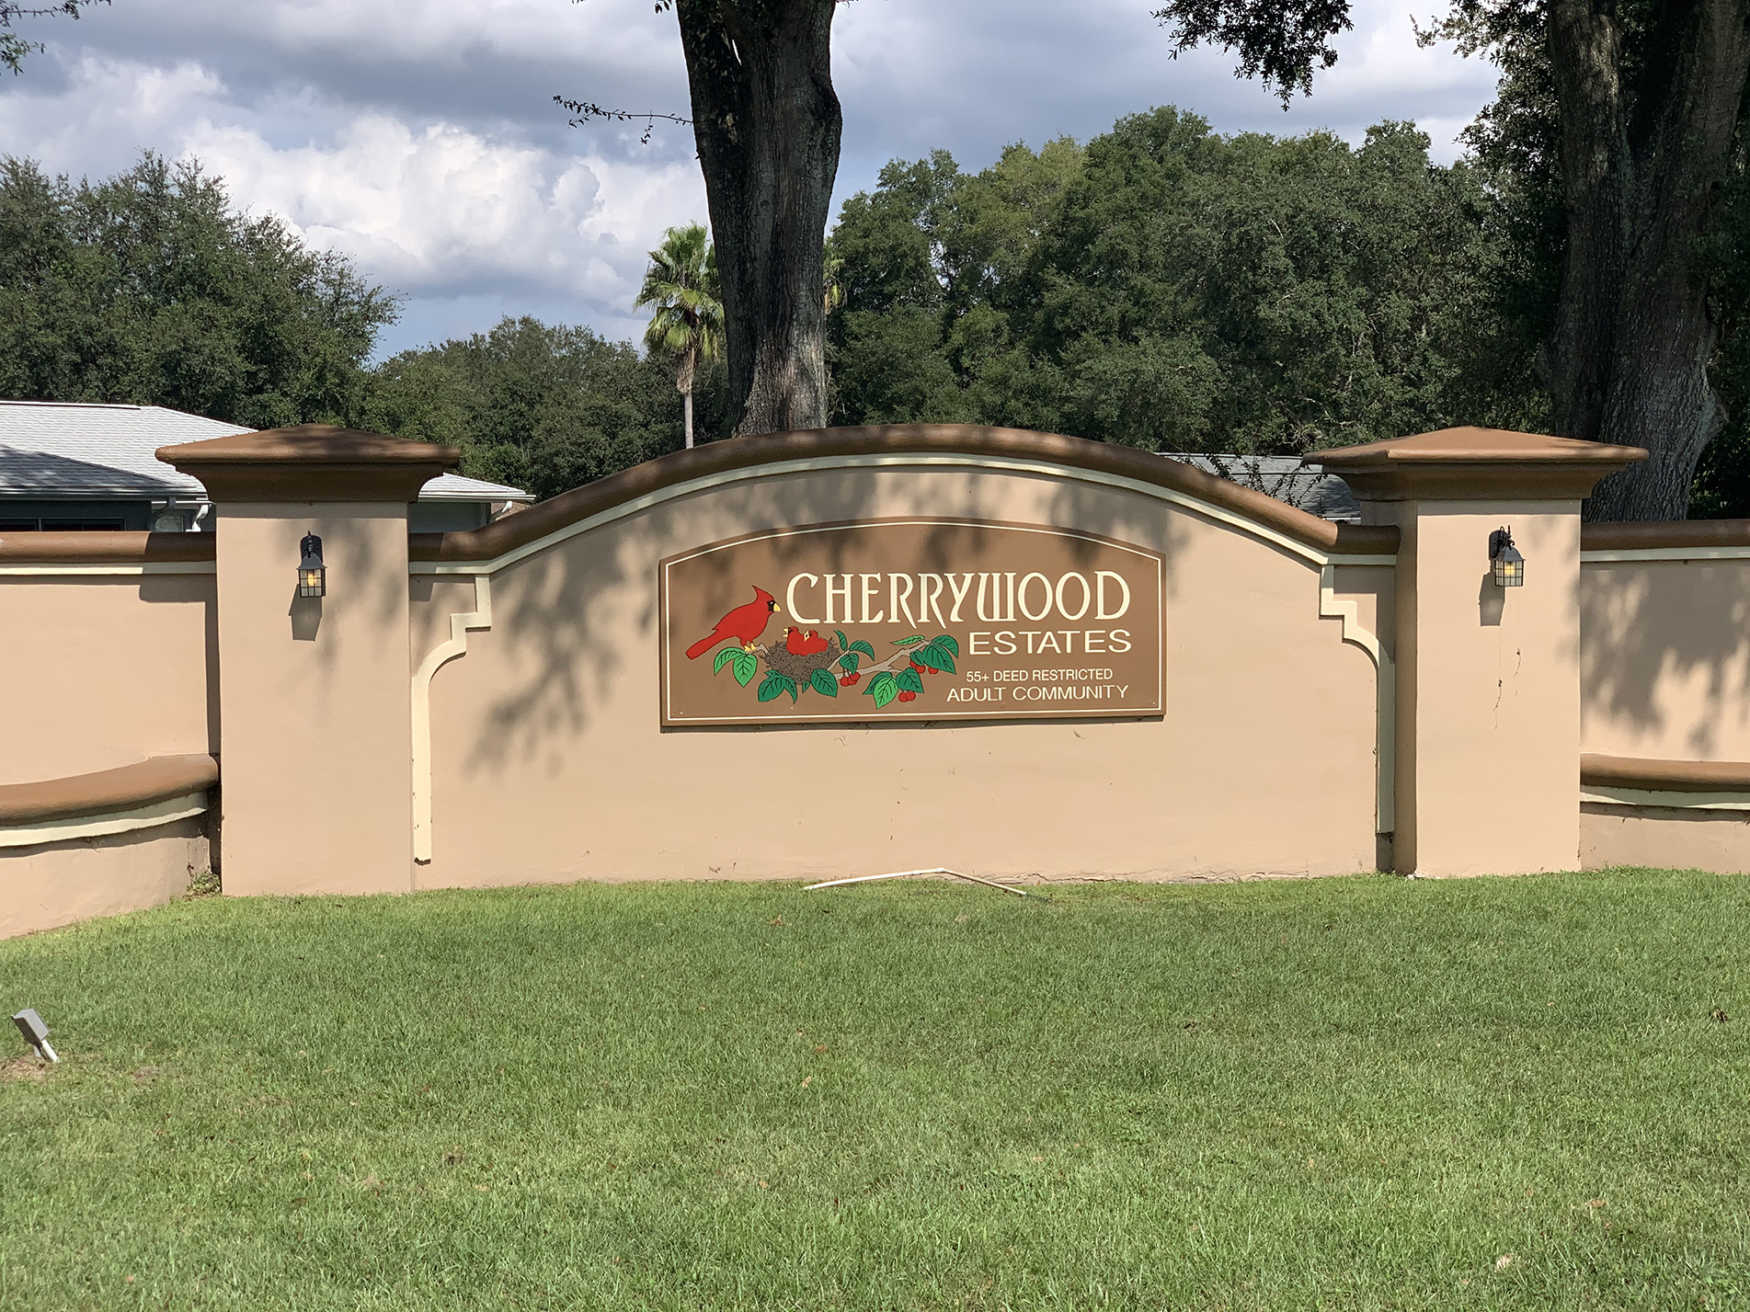 Cherrywood Estates community sign